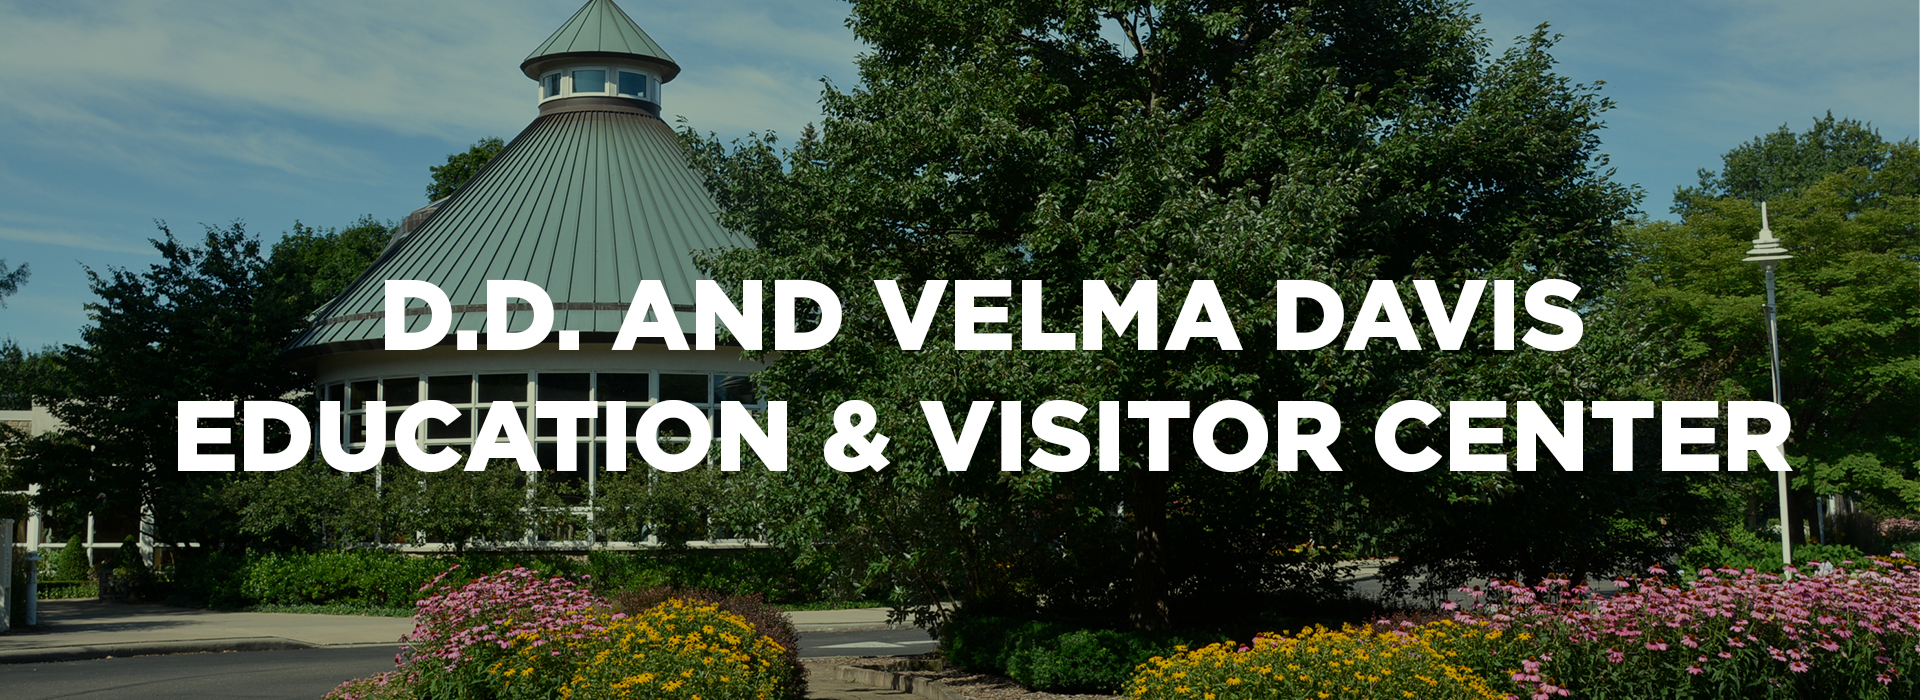 D D And Velma Davis Education Visitor Center Mill Creek